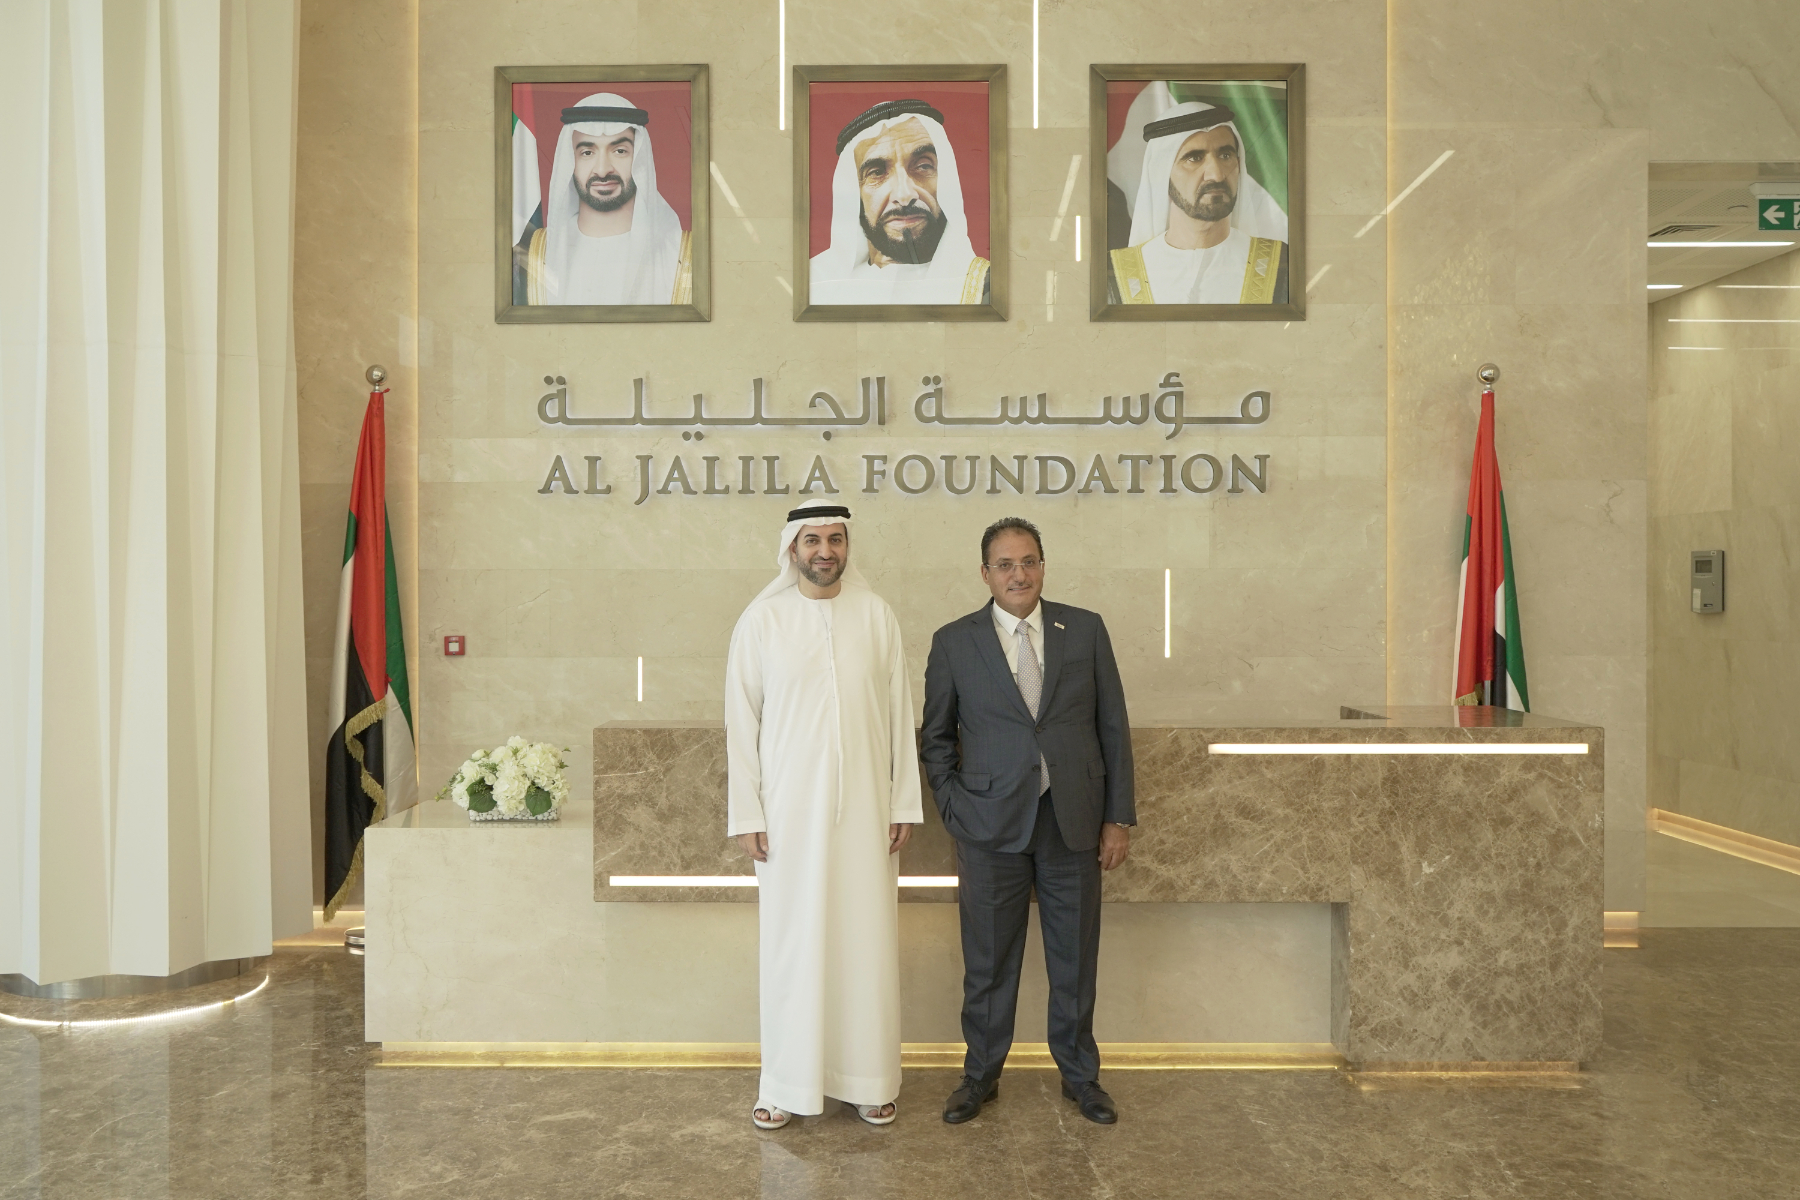 Moafaq Ahmed Al Gaddah pledges AED10 million to Al Jalila Foundation for the Hamdan Bin Rashid Cancer Charity Hospital